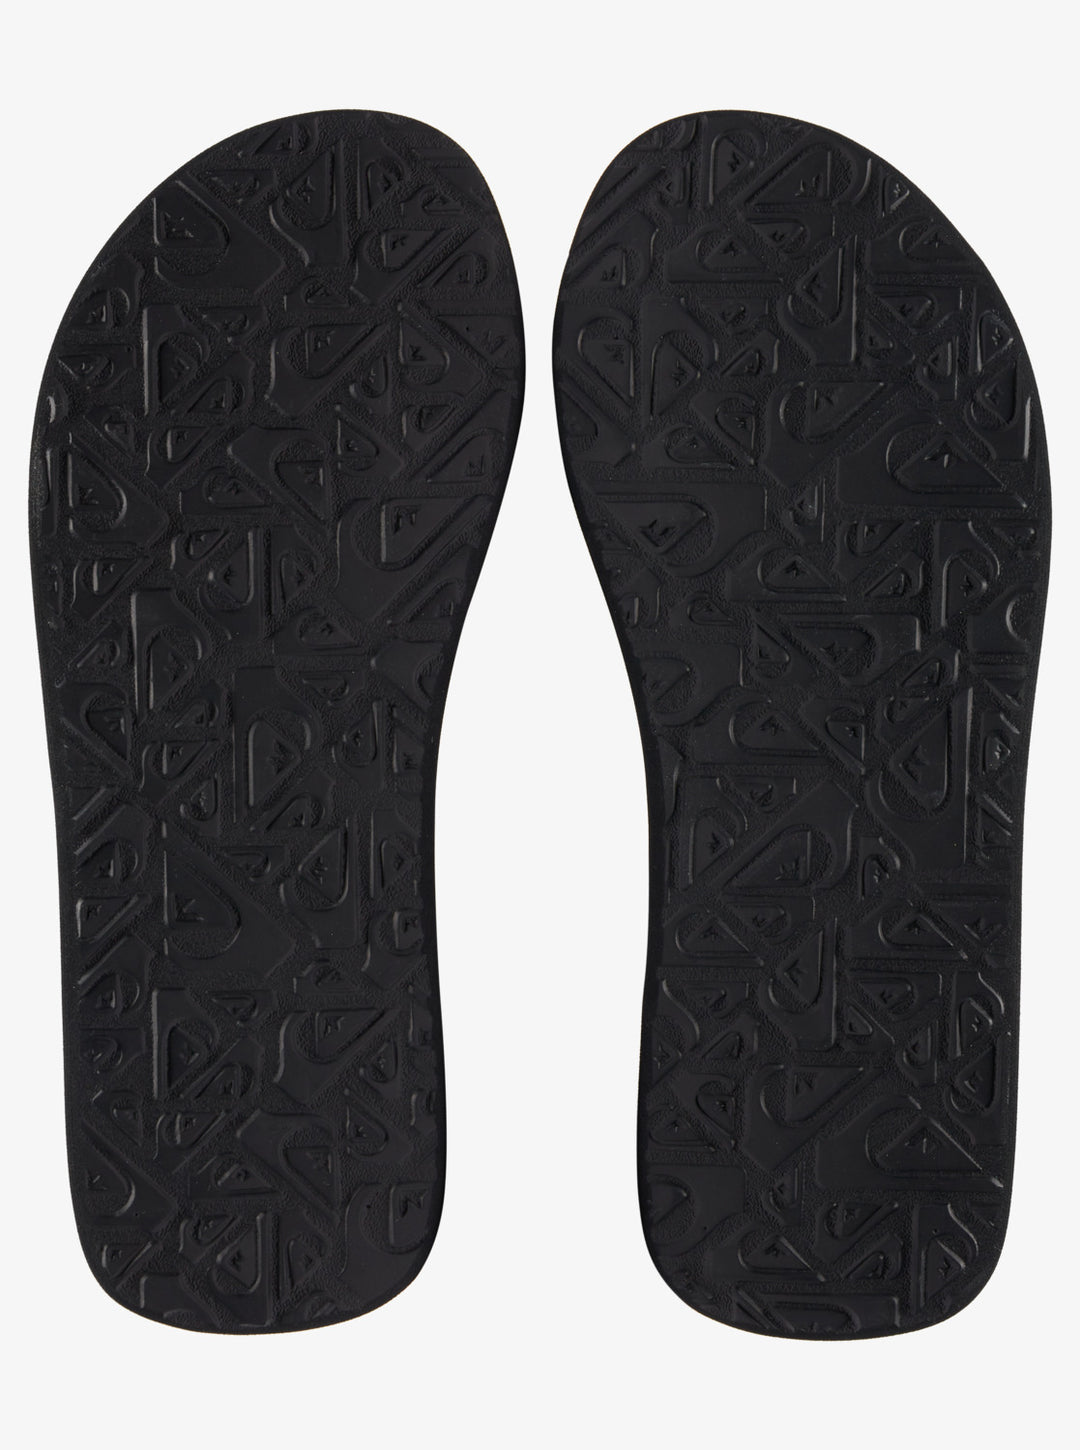 Quiksilver Molokai Layback Sandals - Black/White/Black - Sun Diego Boardshop